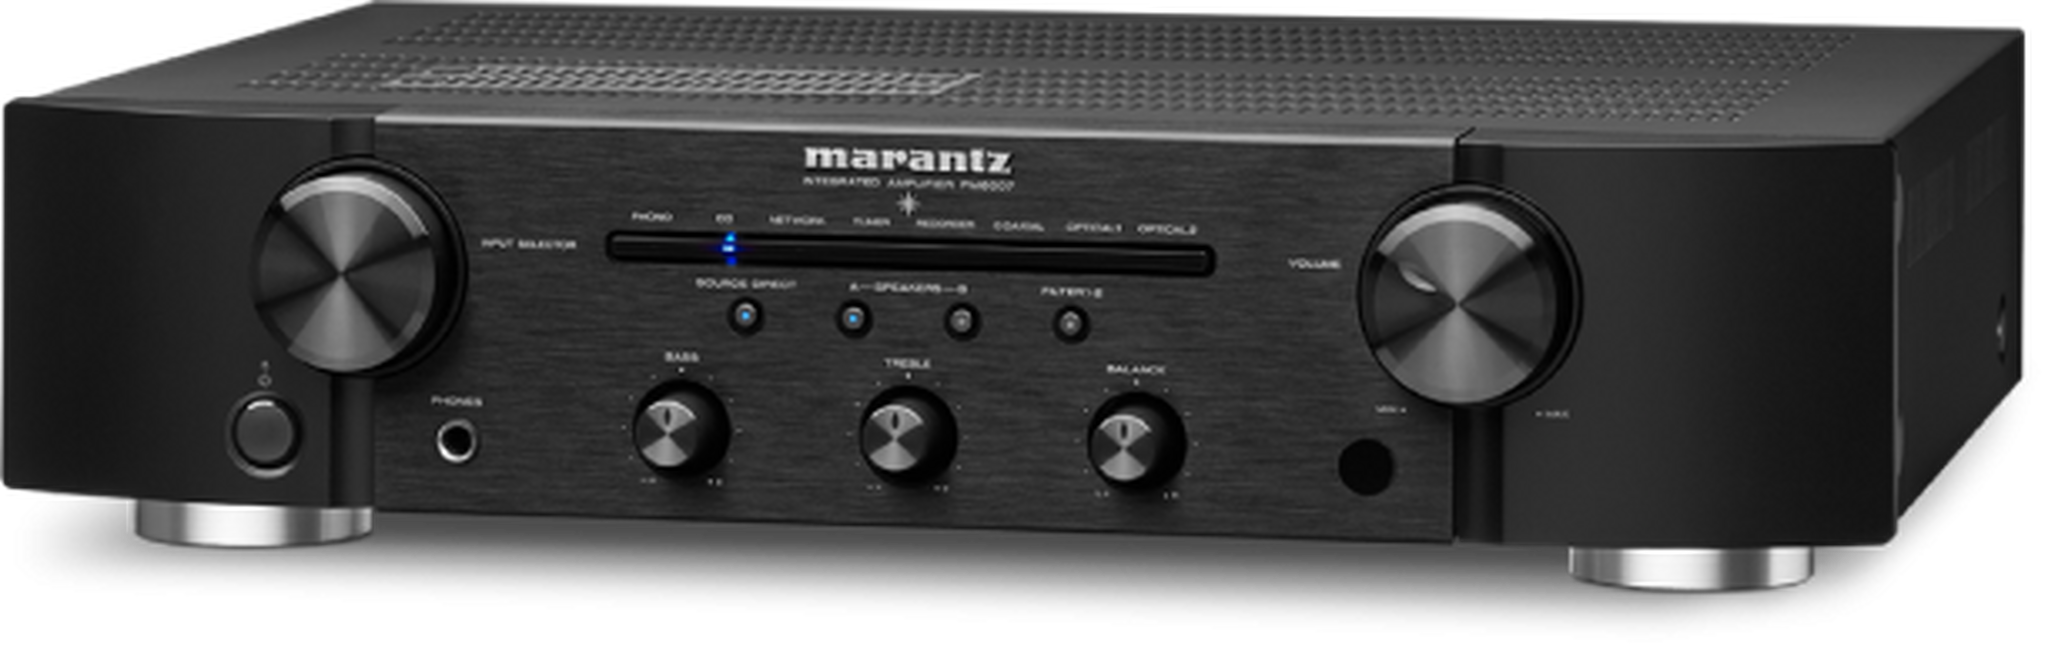 Marantz 45W Integrated Amplifier (PM6007)